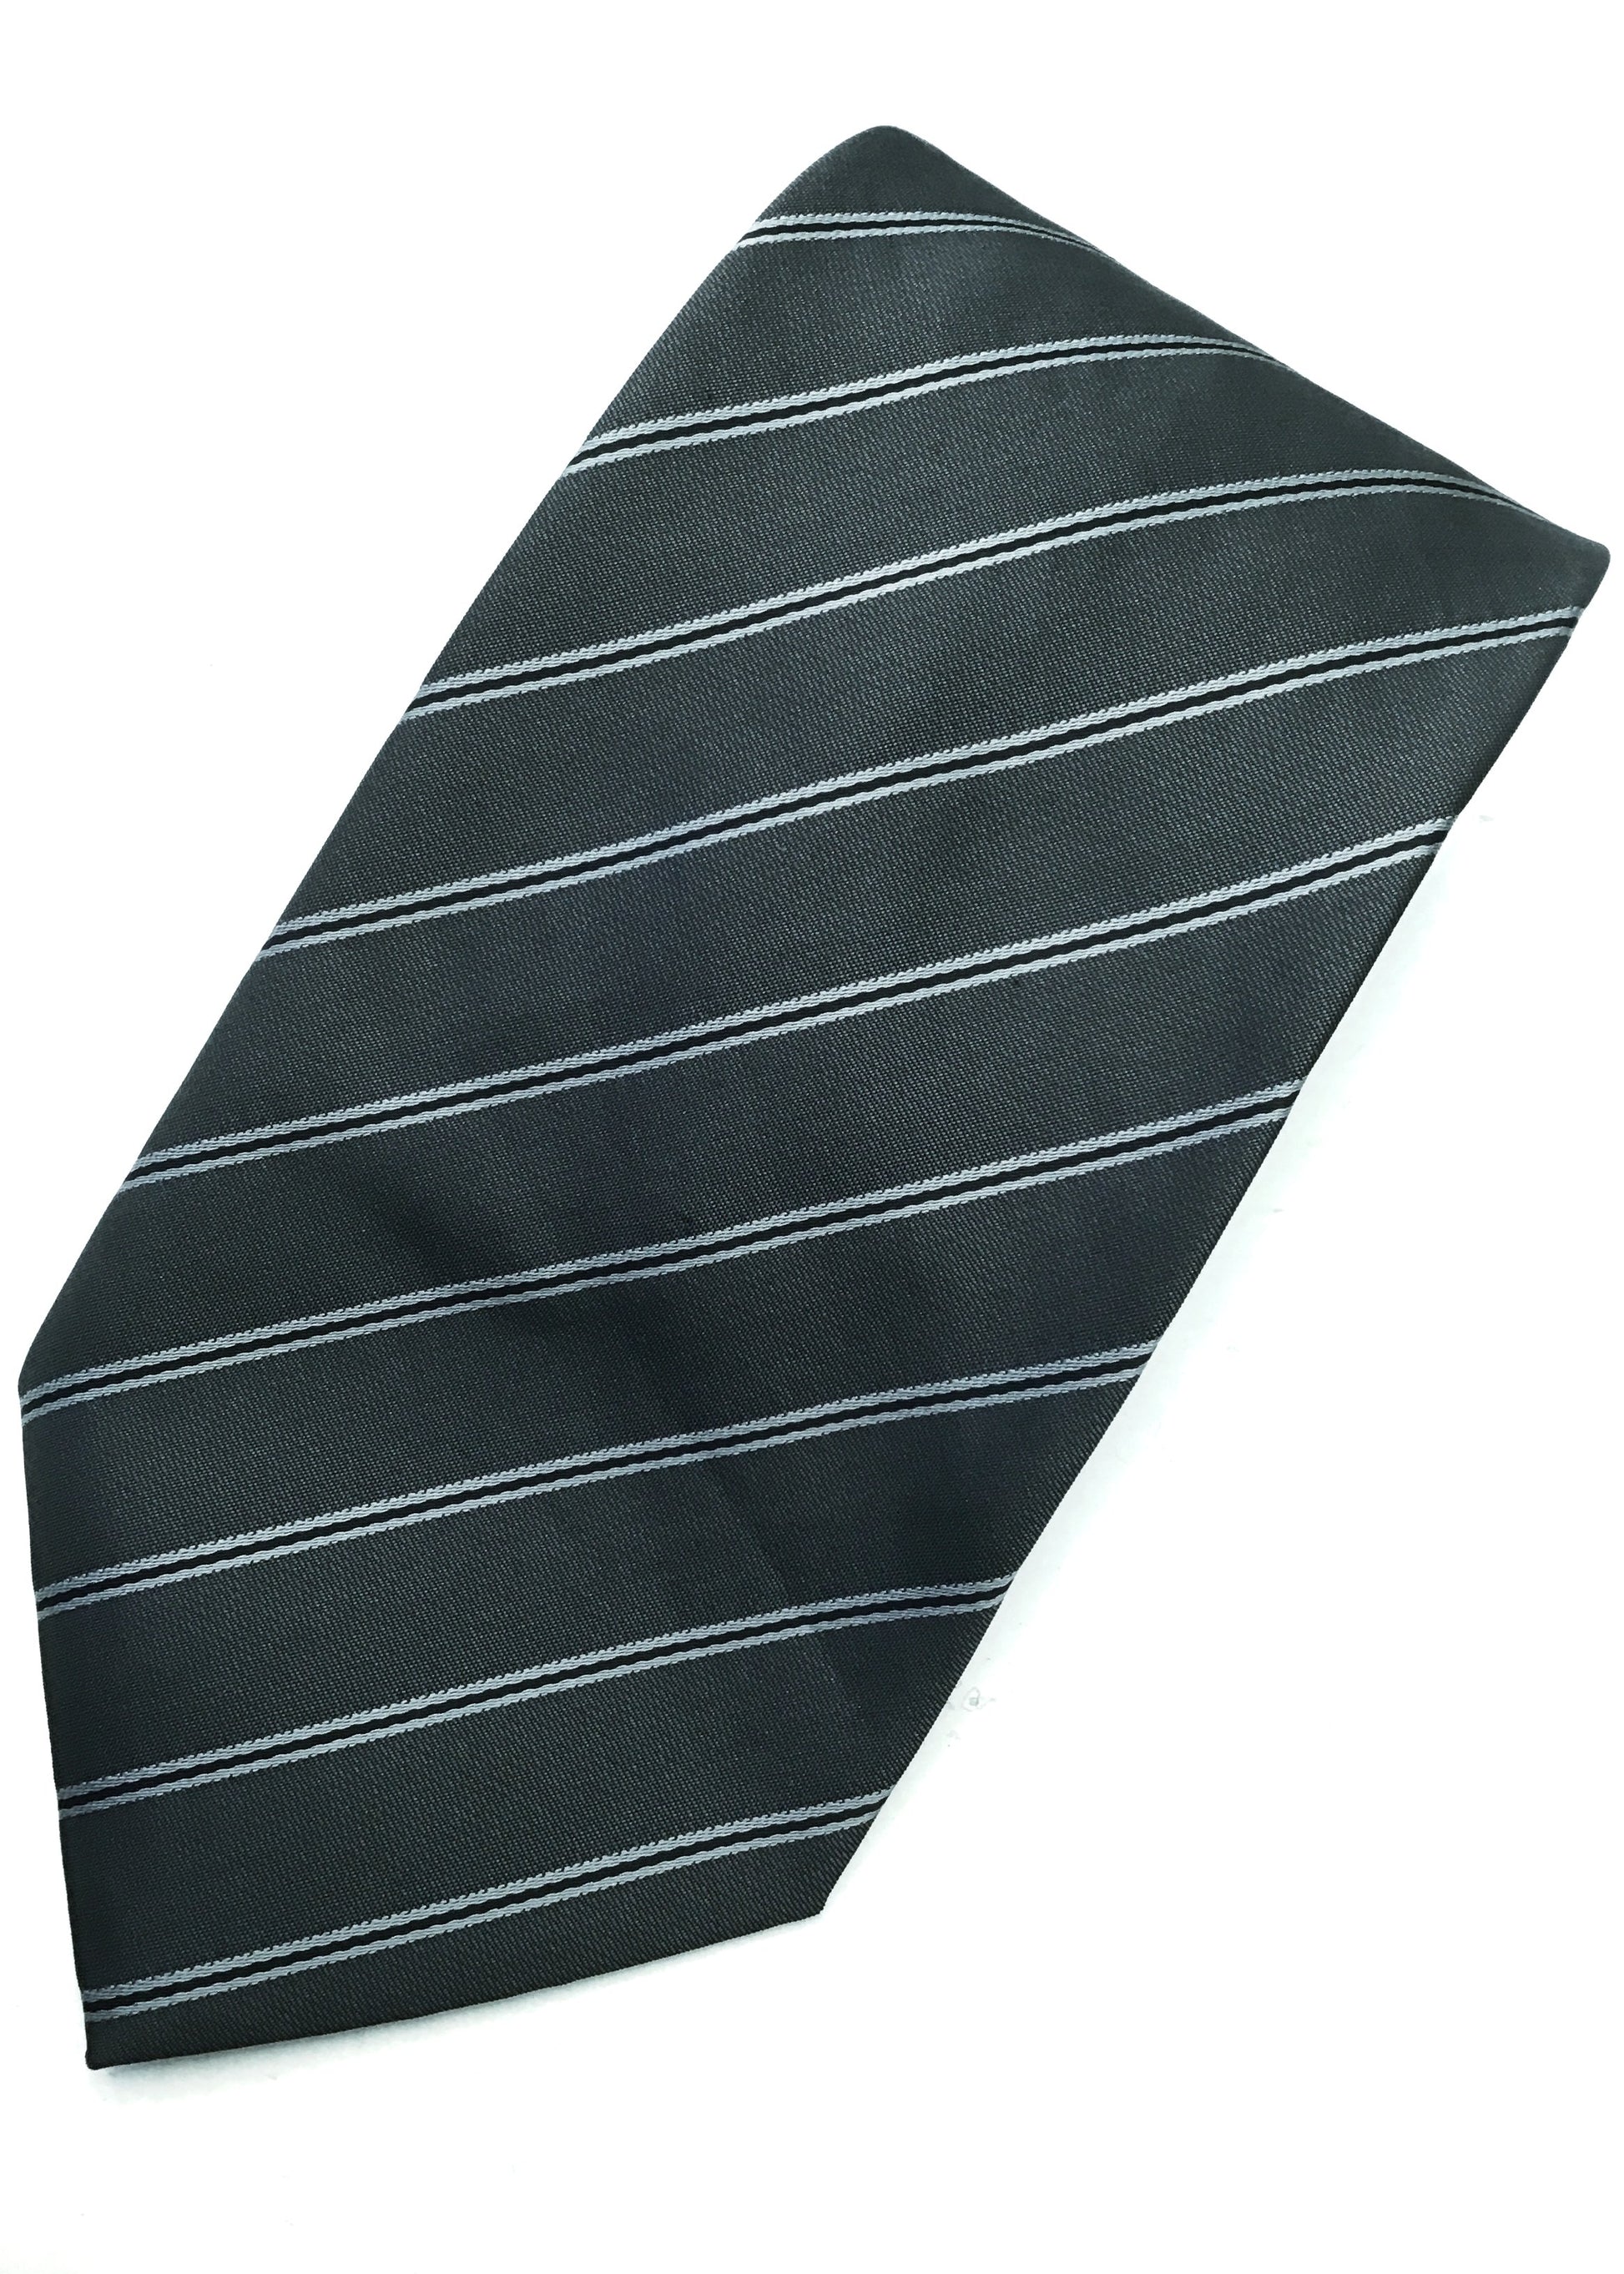 vintage Cedarwood State neck tie in grey green diagonal stripes